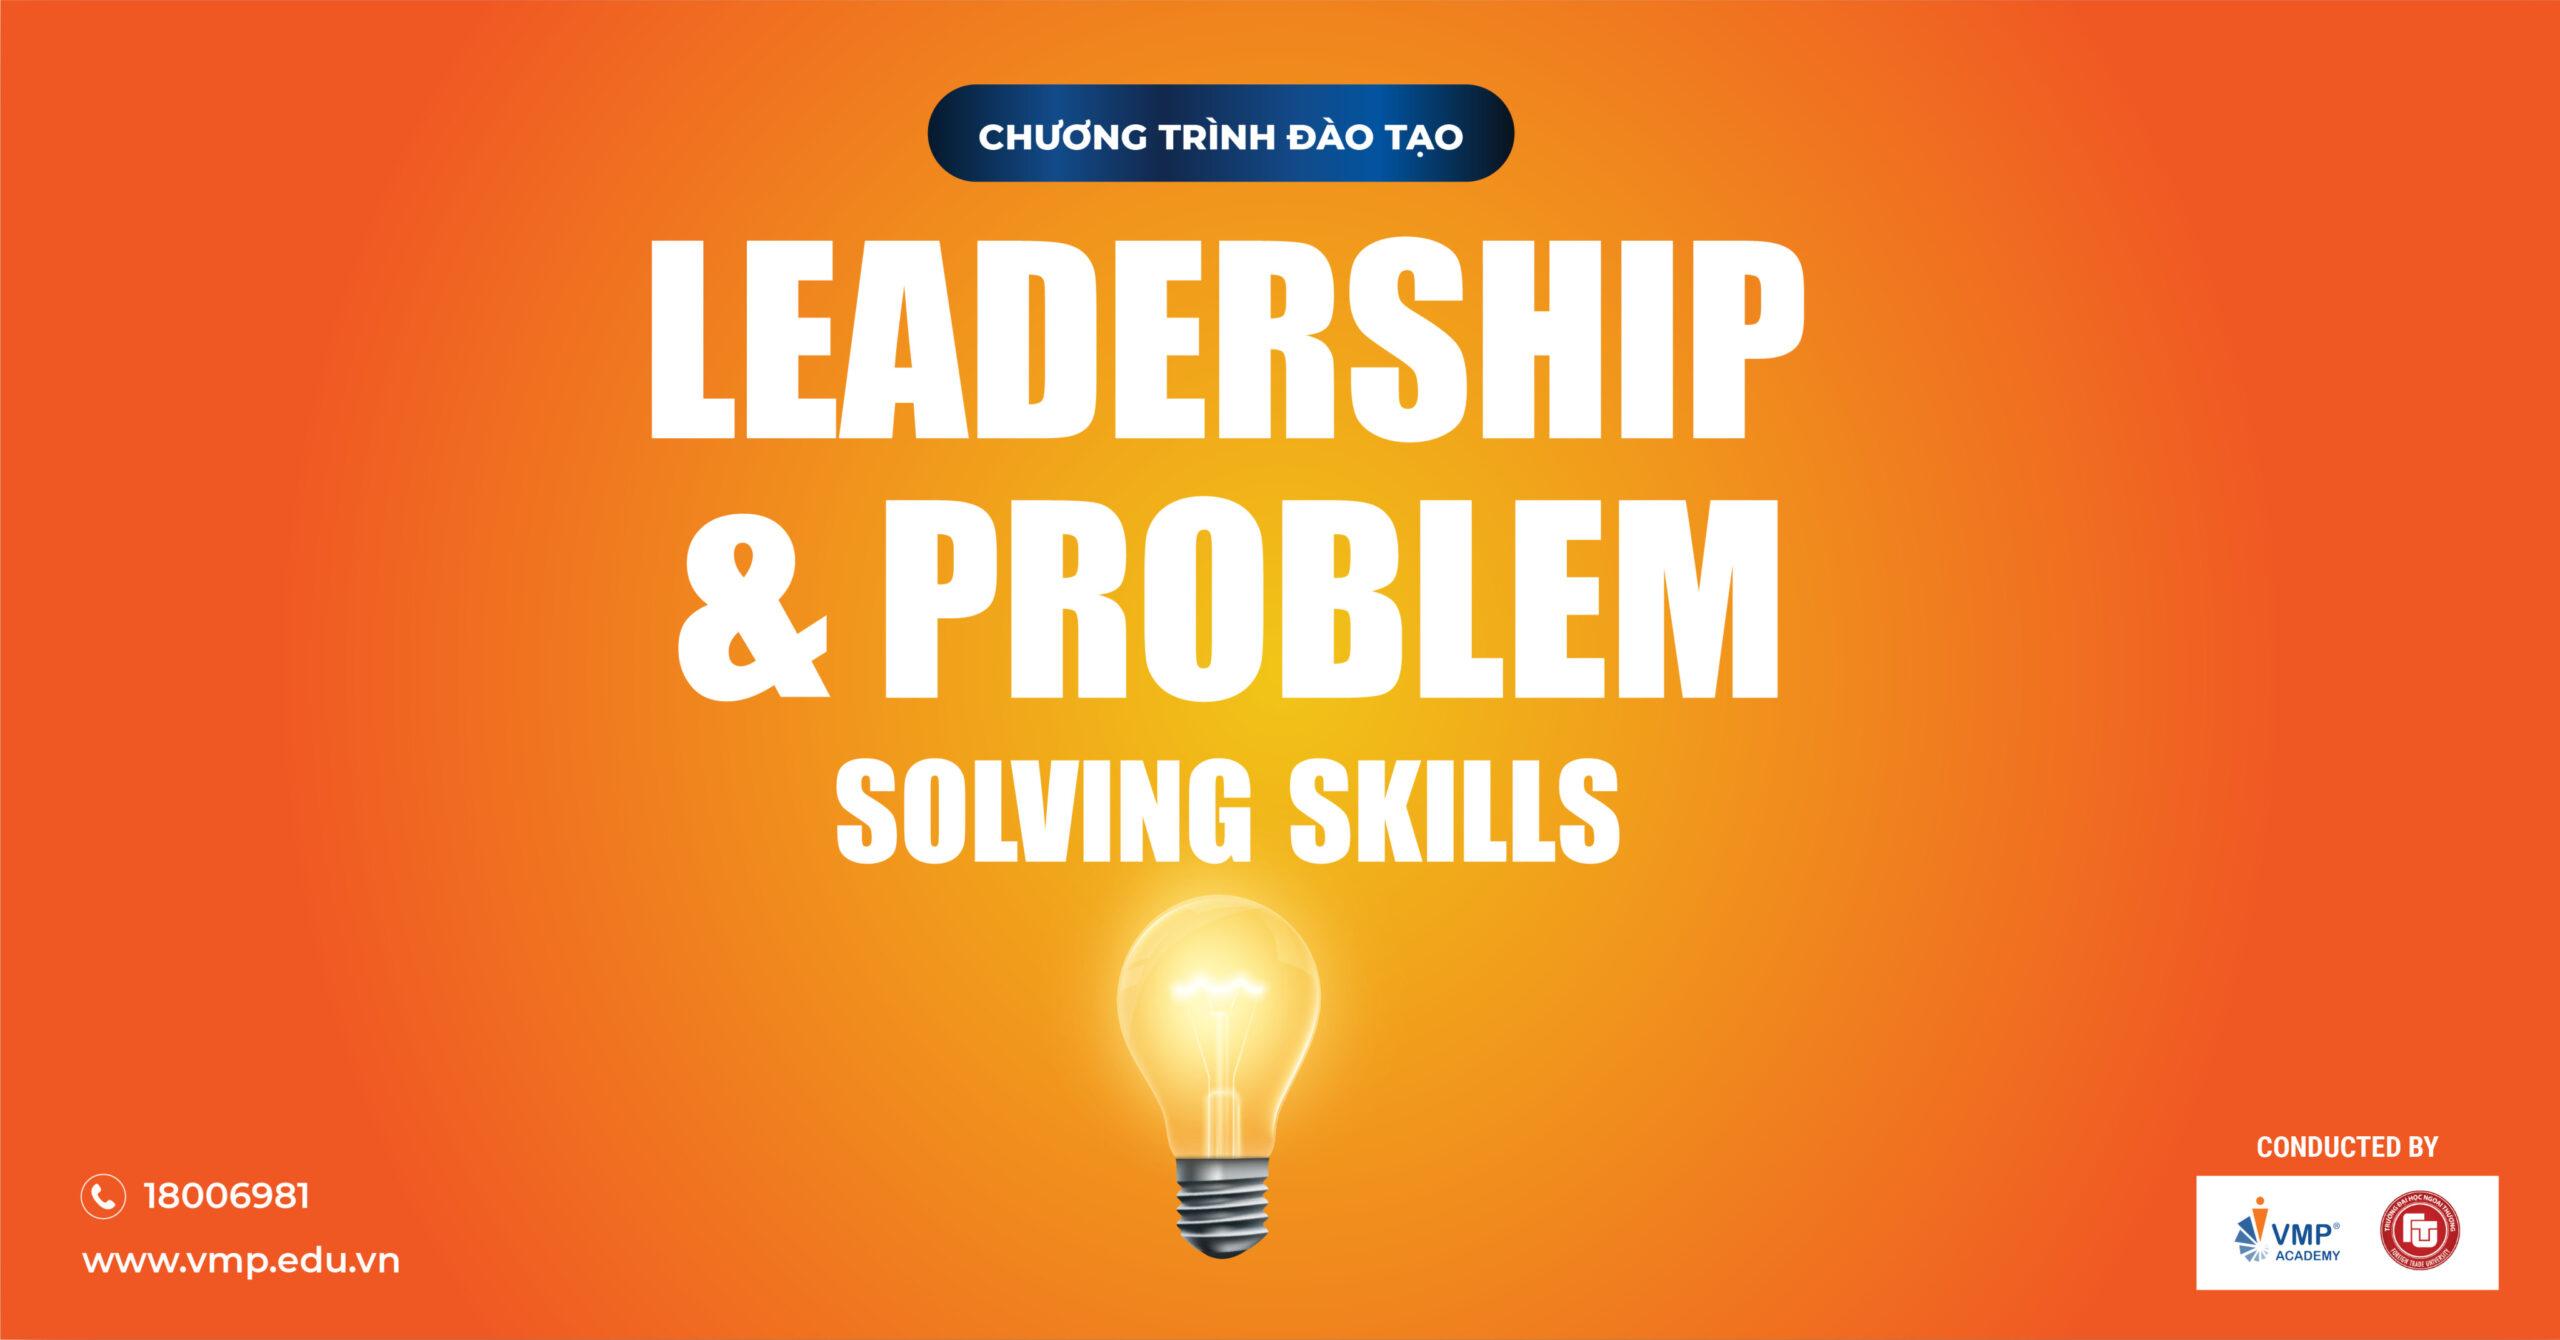 school leadership problem solving